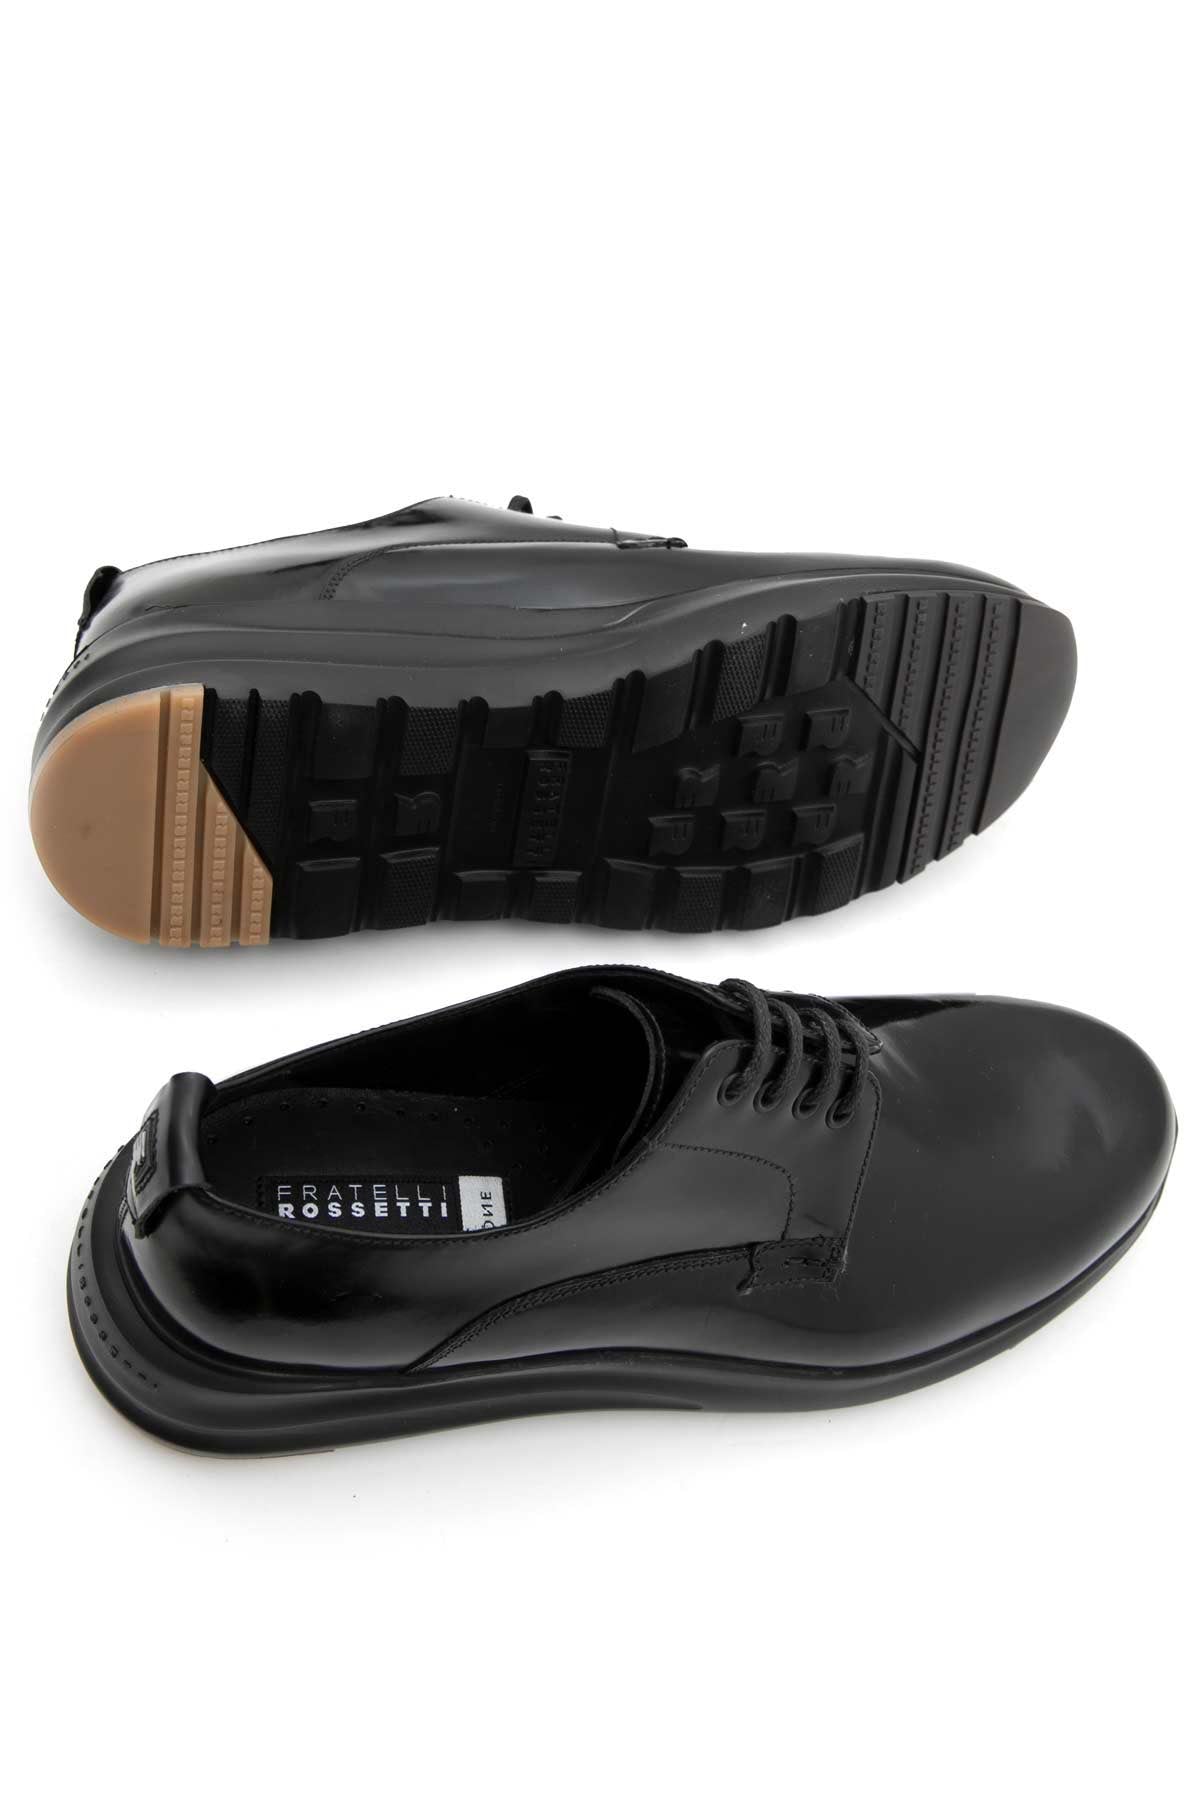 Fratelli Rossetti Lastik Tabanlı Ayakkabı-Libas Trendy Fashion Store